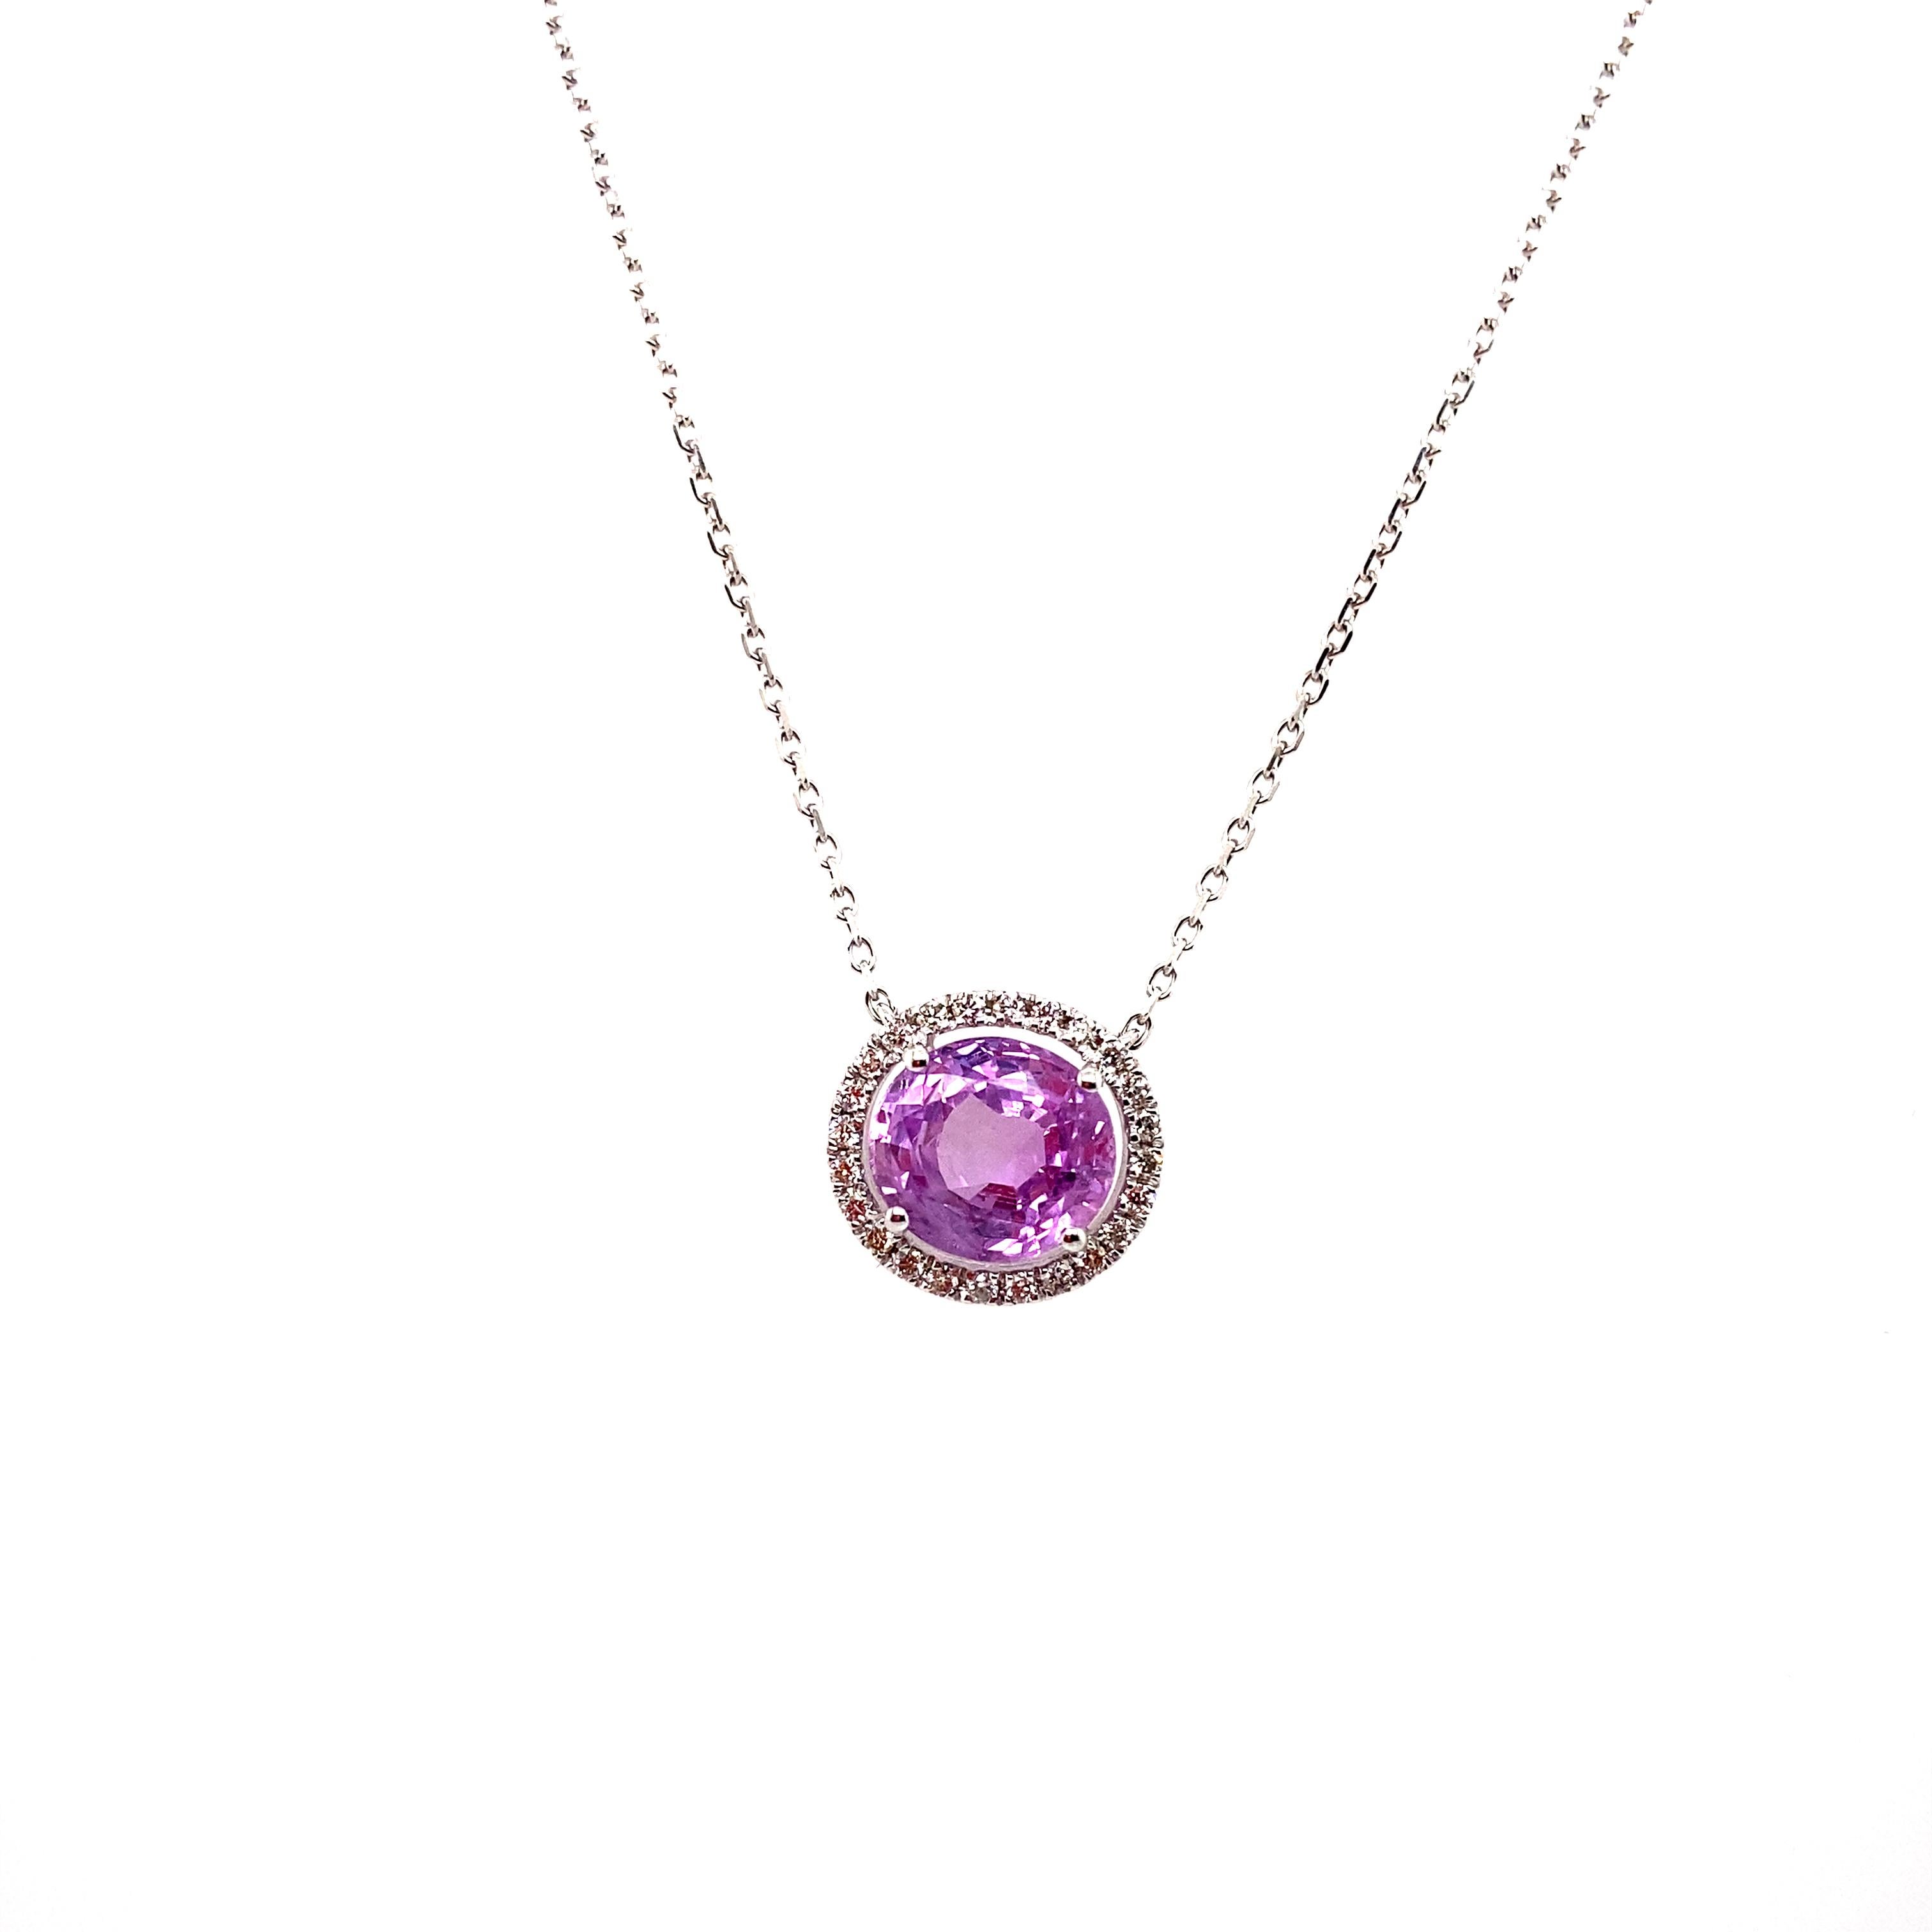 Women's or Men's 3.07Carat No Heat Purple Sapphire and Diamond Pendant Necklace For Sale